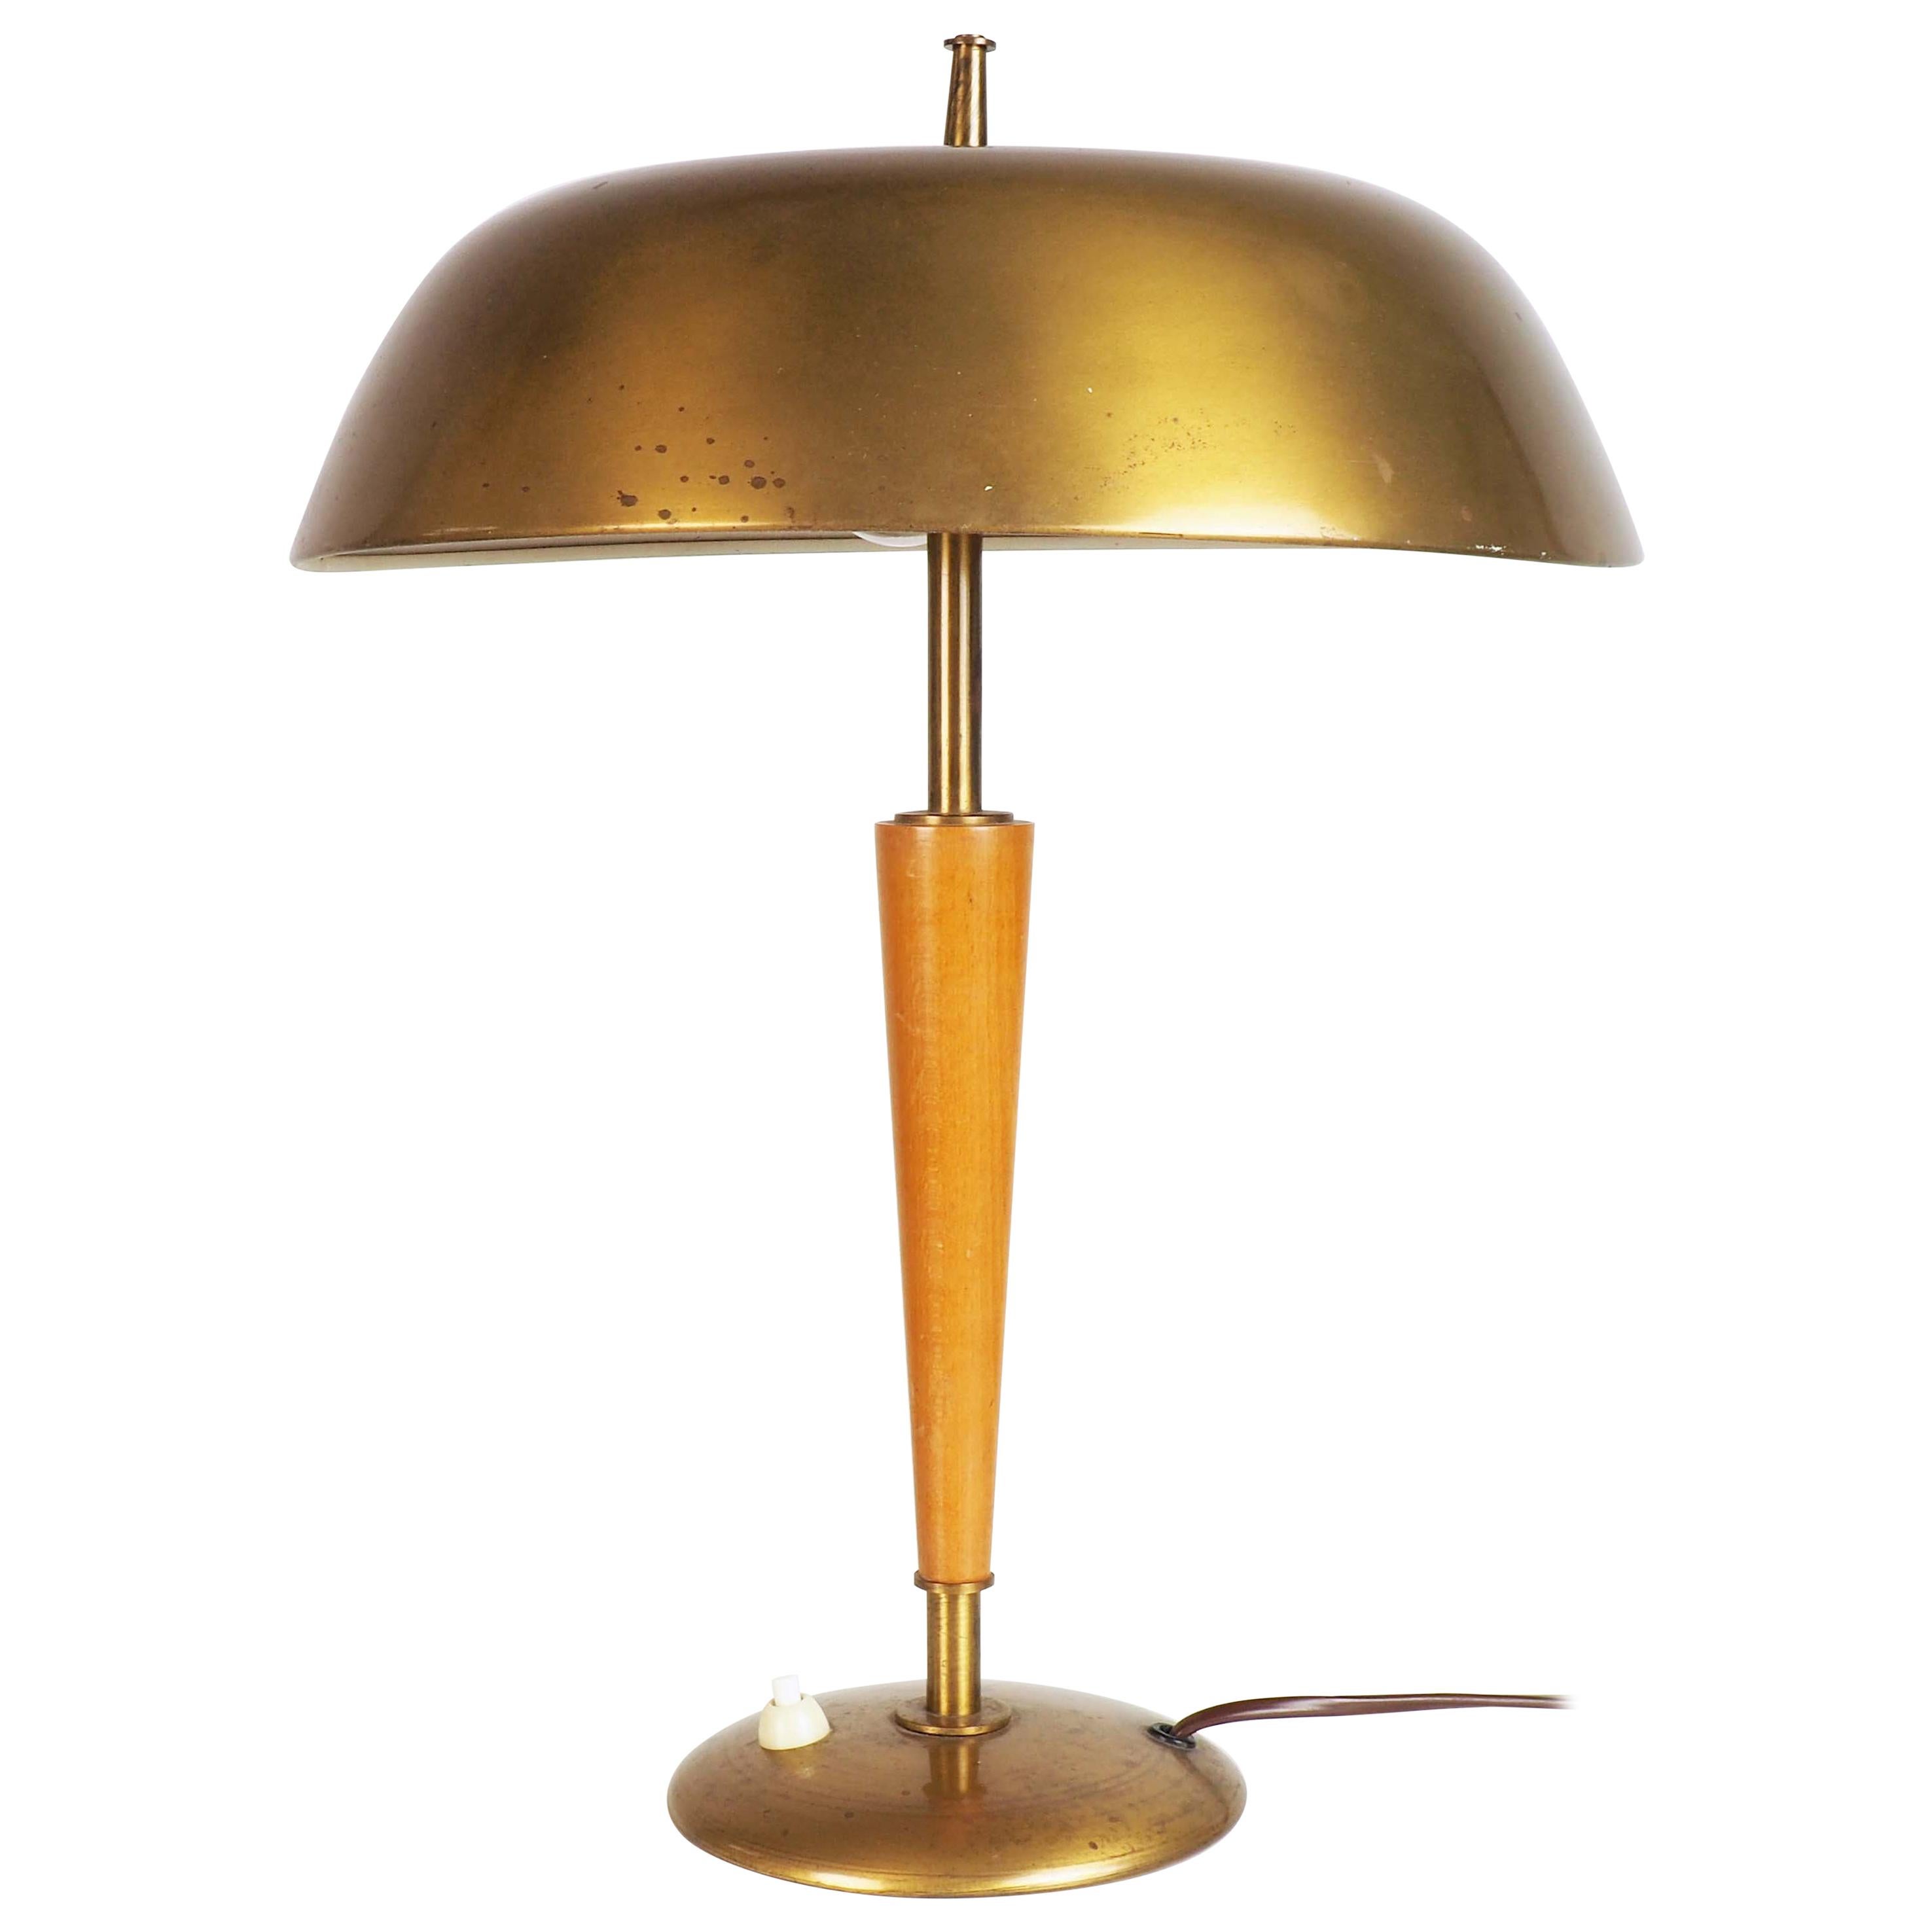 Table Lamp in Elm and Brass from Nordiska Kompaniet, Stockholm, Sweden, 1940s